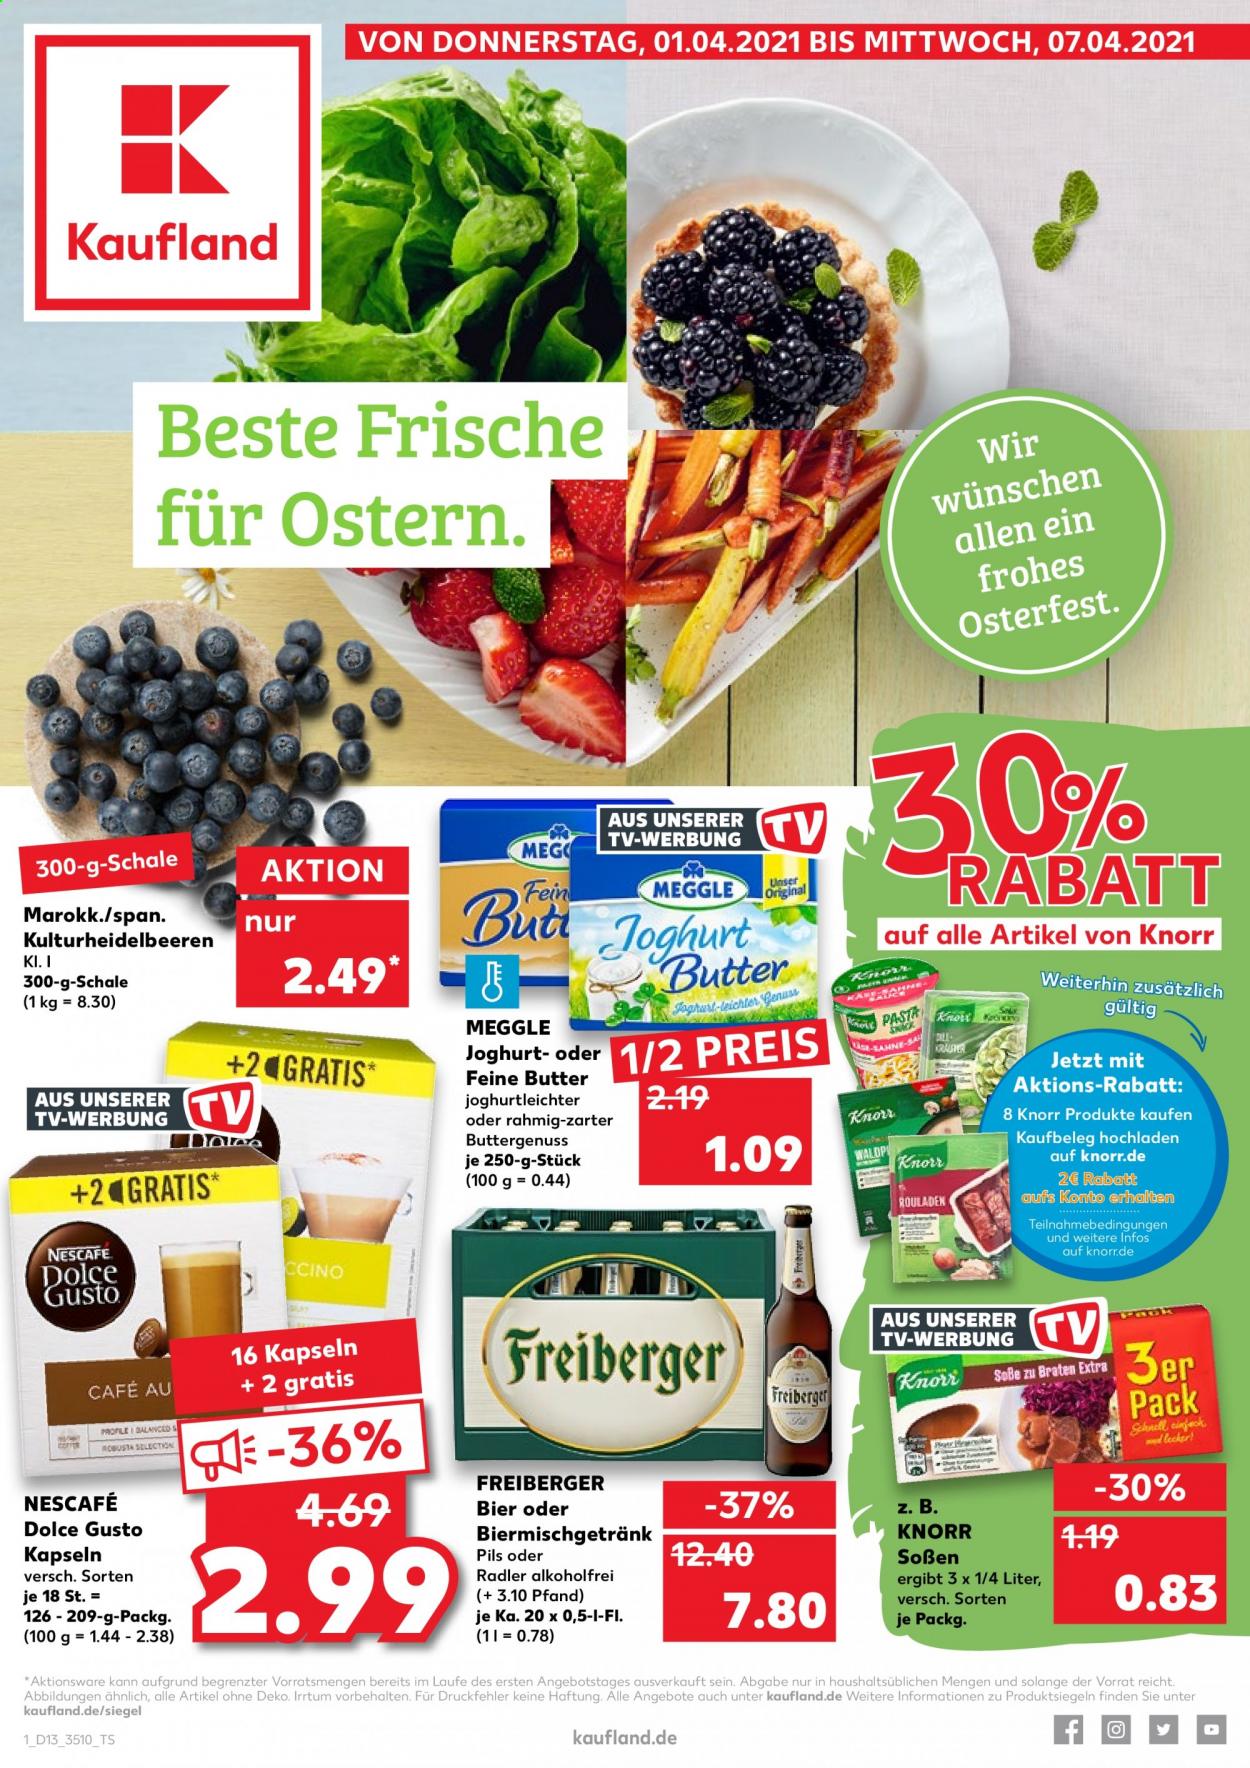 thumbnail - Prospekte Kaufland - 1.04.2021 - 7.04.2021 - Produkte in Aktion - Freiberger, Knorr, Meggle, Joghurt, Butter, Nescafé, Schale. Seite 1.